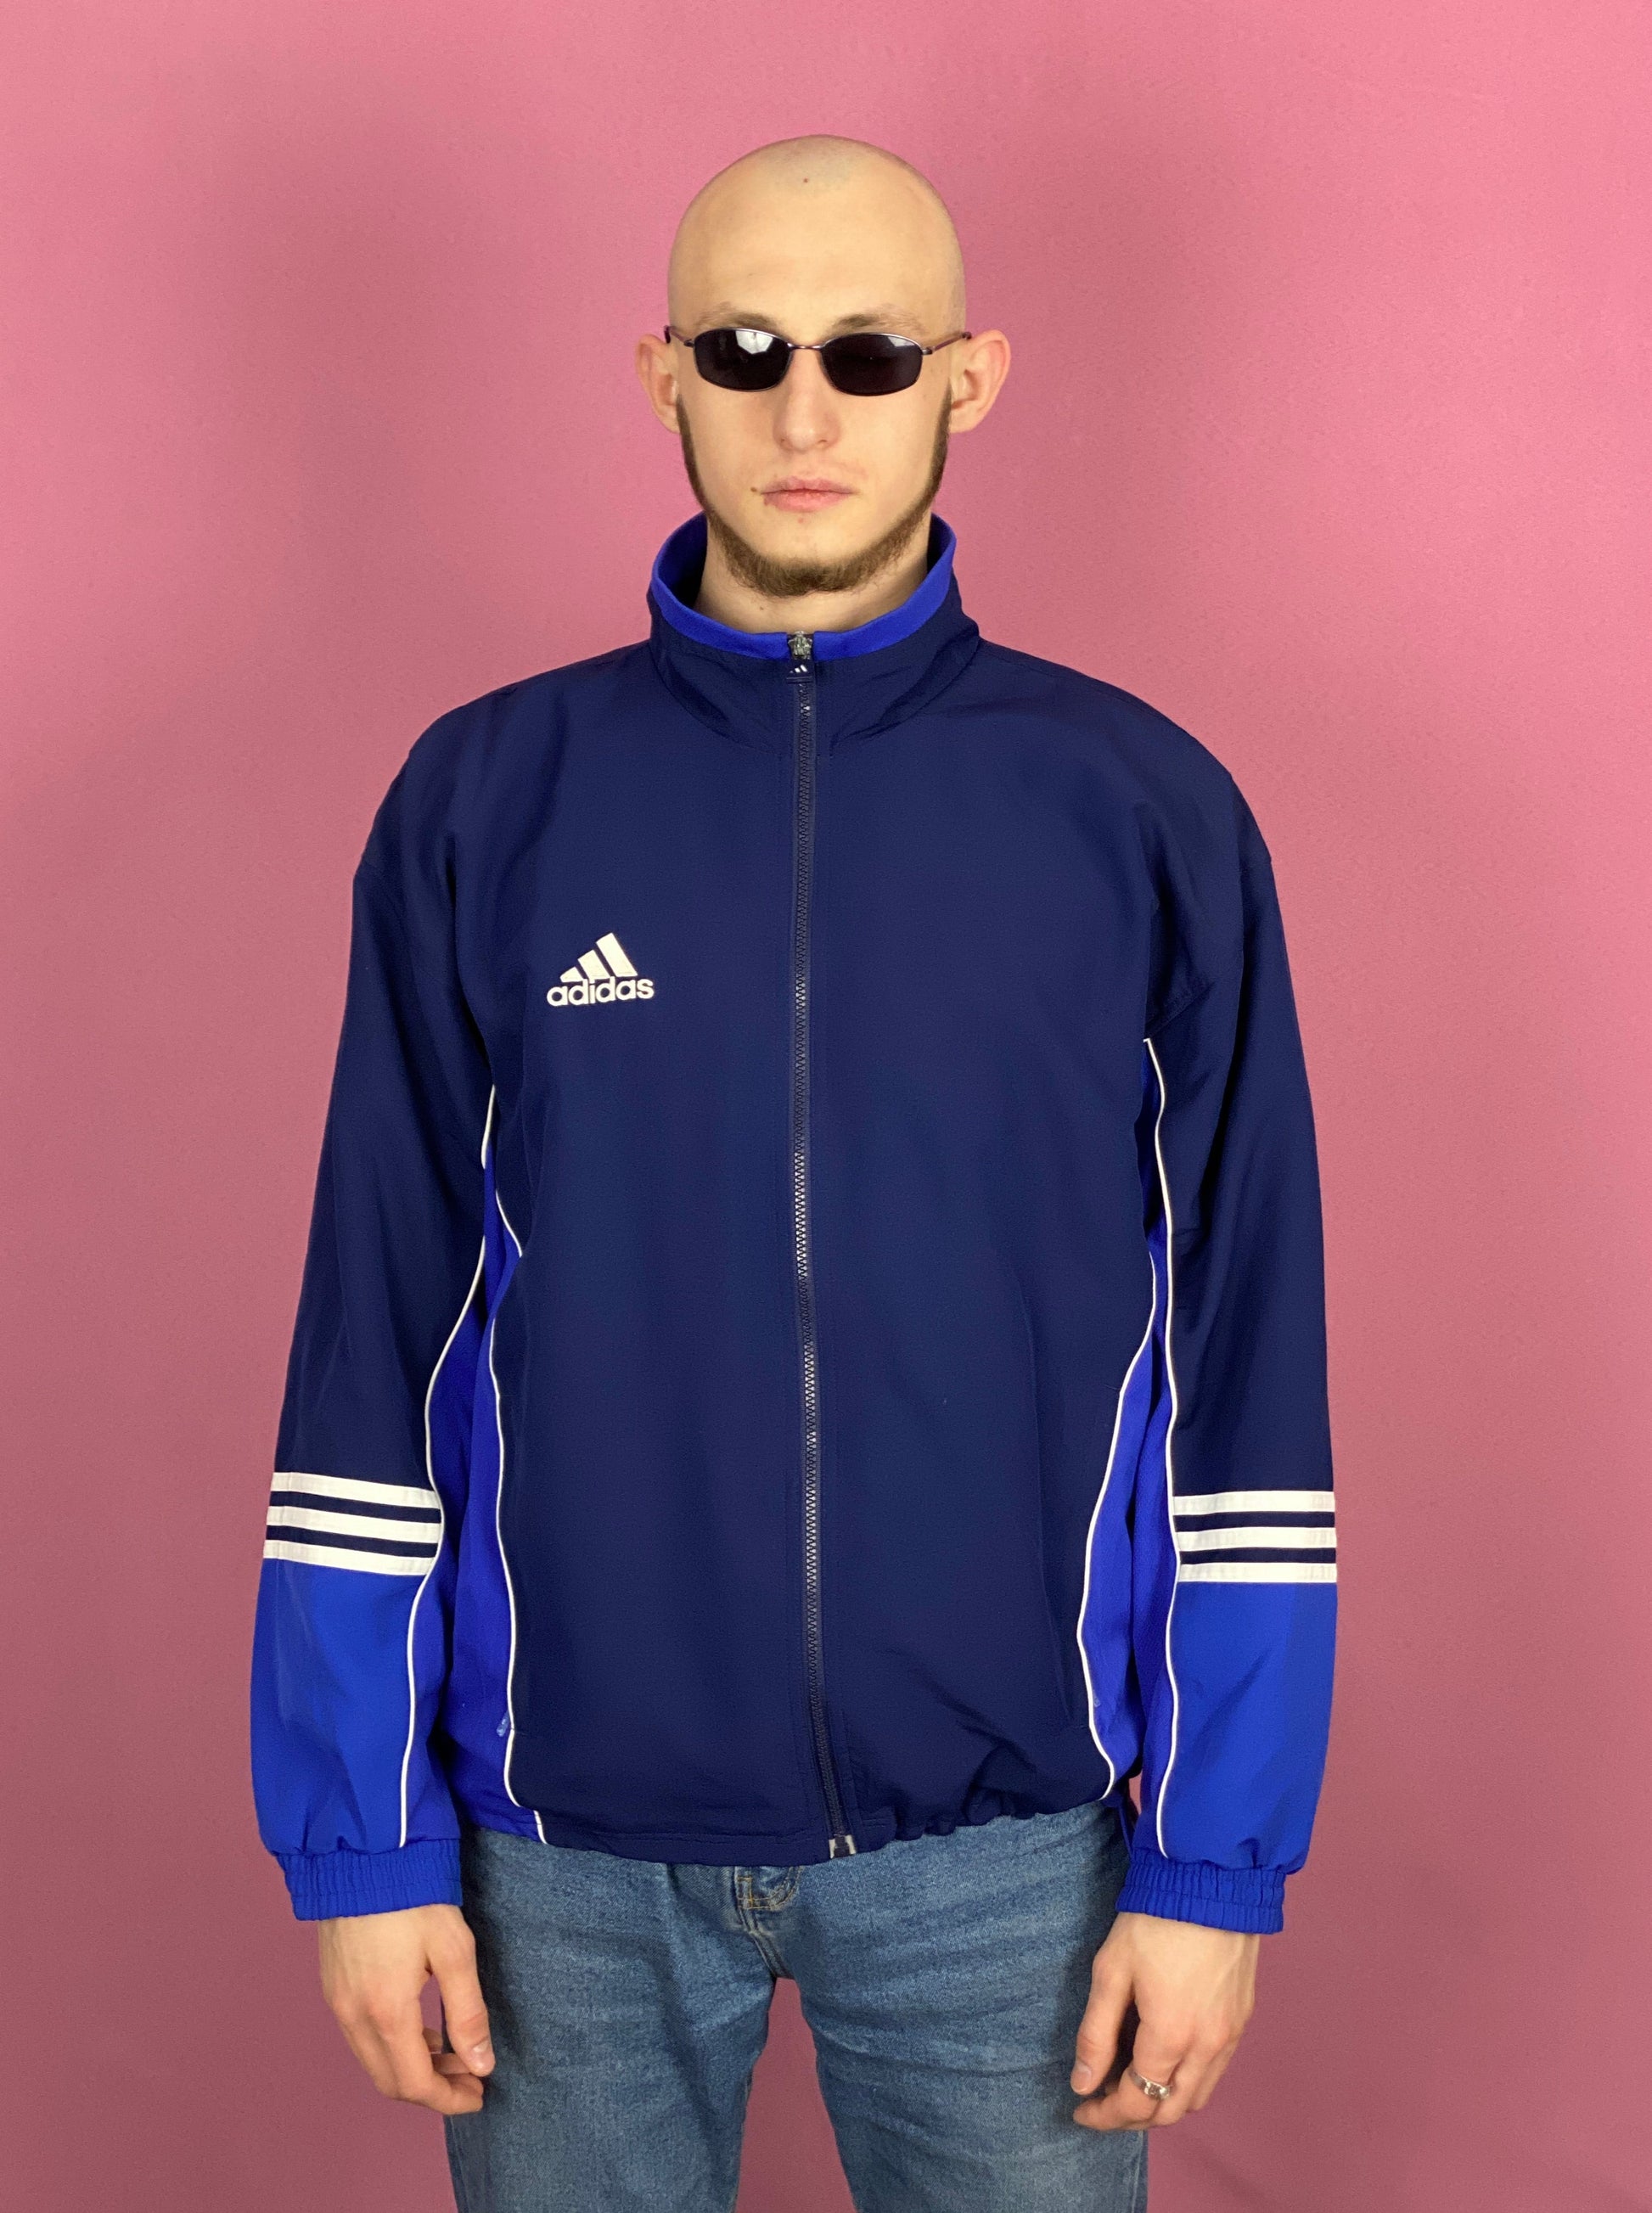 90s Adidas Vintage Men's Windbreaker Jacket - M Navy Blue Polyester